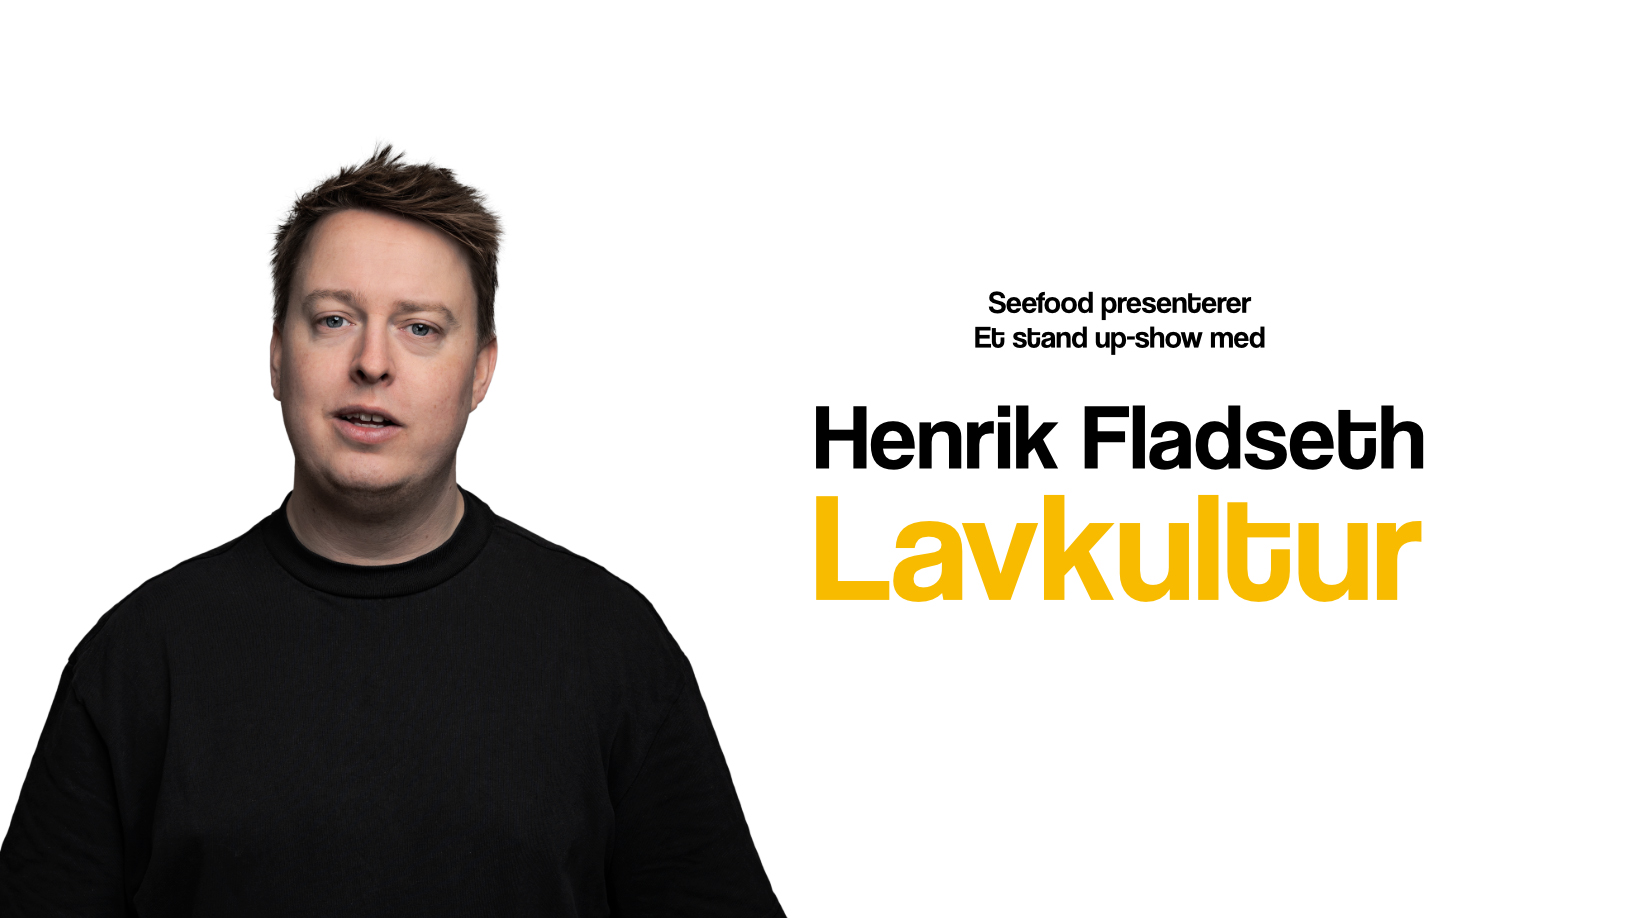 Henrik Fladseth: Low culture